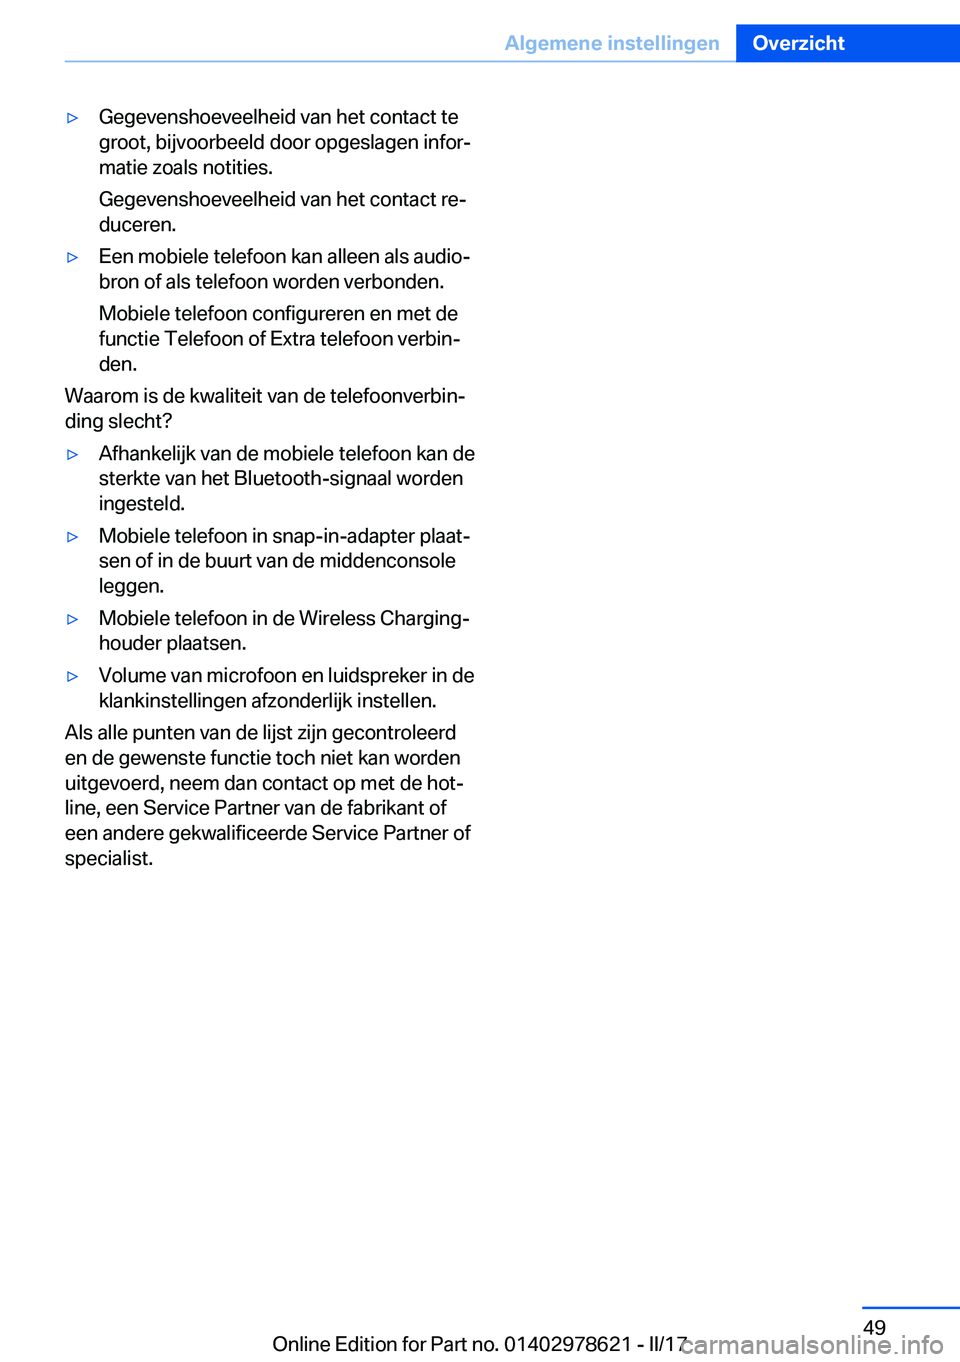 BMW 7 SERIES 2018  Instructieboekjes (in Dutch) 'y�G�e�g�e�v�e�n�s�h�o�e�v�e�e�l�h�e�i�d� �v�a�n� �h�e�t� �c�o�n�t�a�c�t� �t�e
�g�r�o�o�t�,� �b�i�j�v�o�o�r�b�e�e�l�d� �d�o�o�r� �o�p�g�e�s�l�a�g�e�n� �i�n�f�o�rj �m�a�t�i�e� �z�o�a�l�s� �n�o�t�i